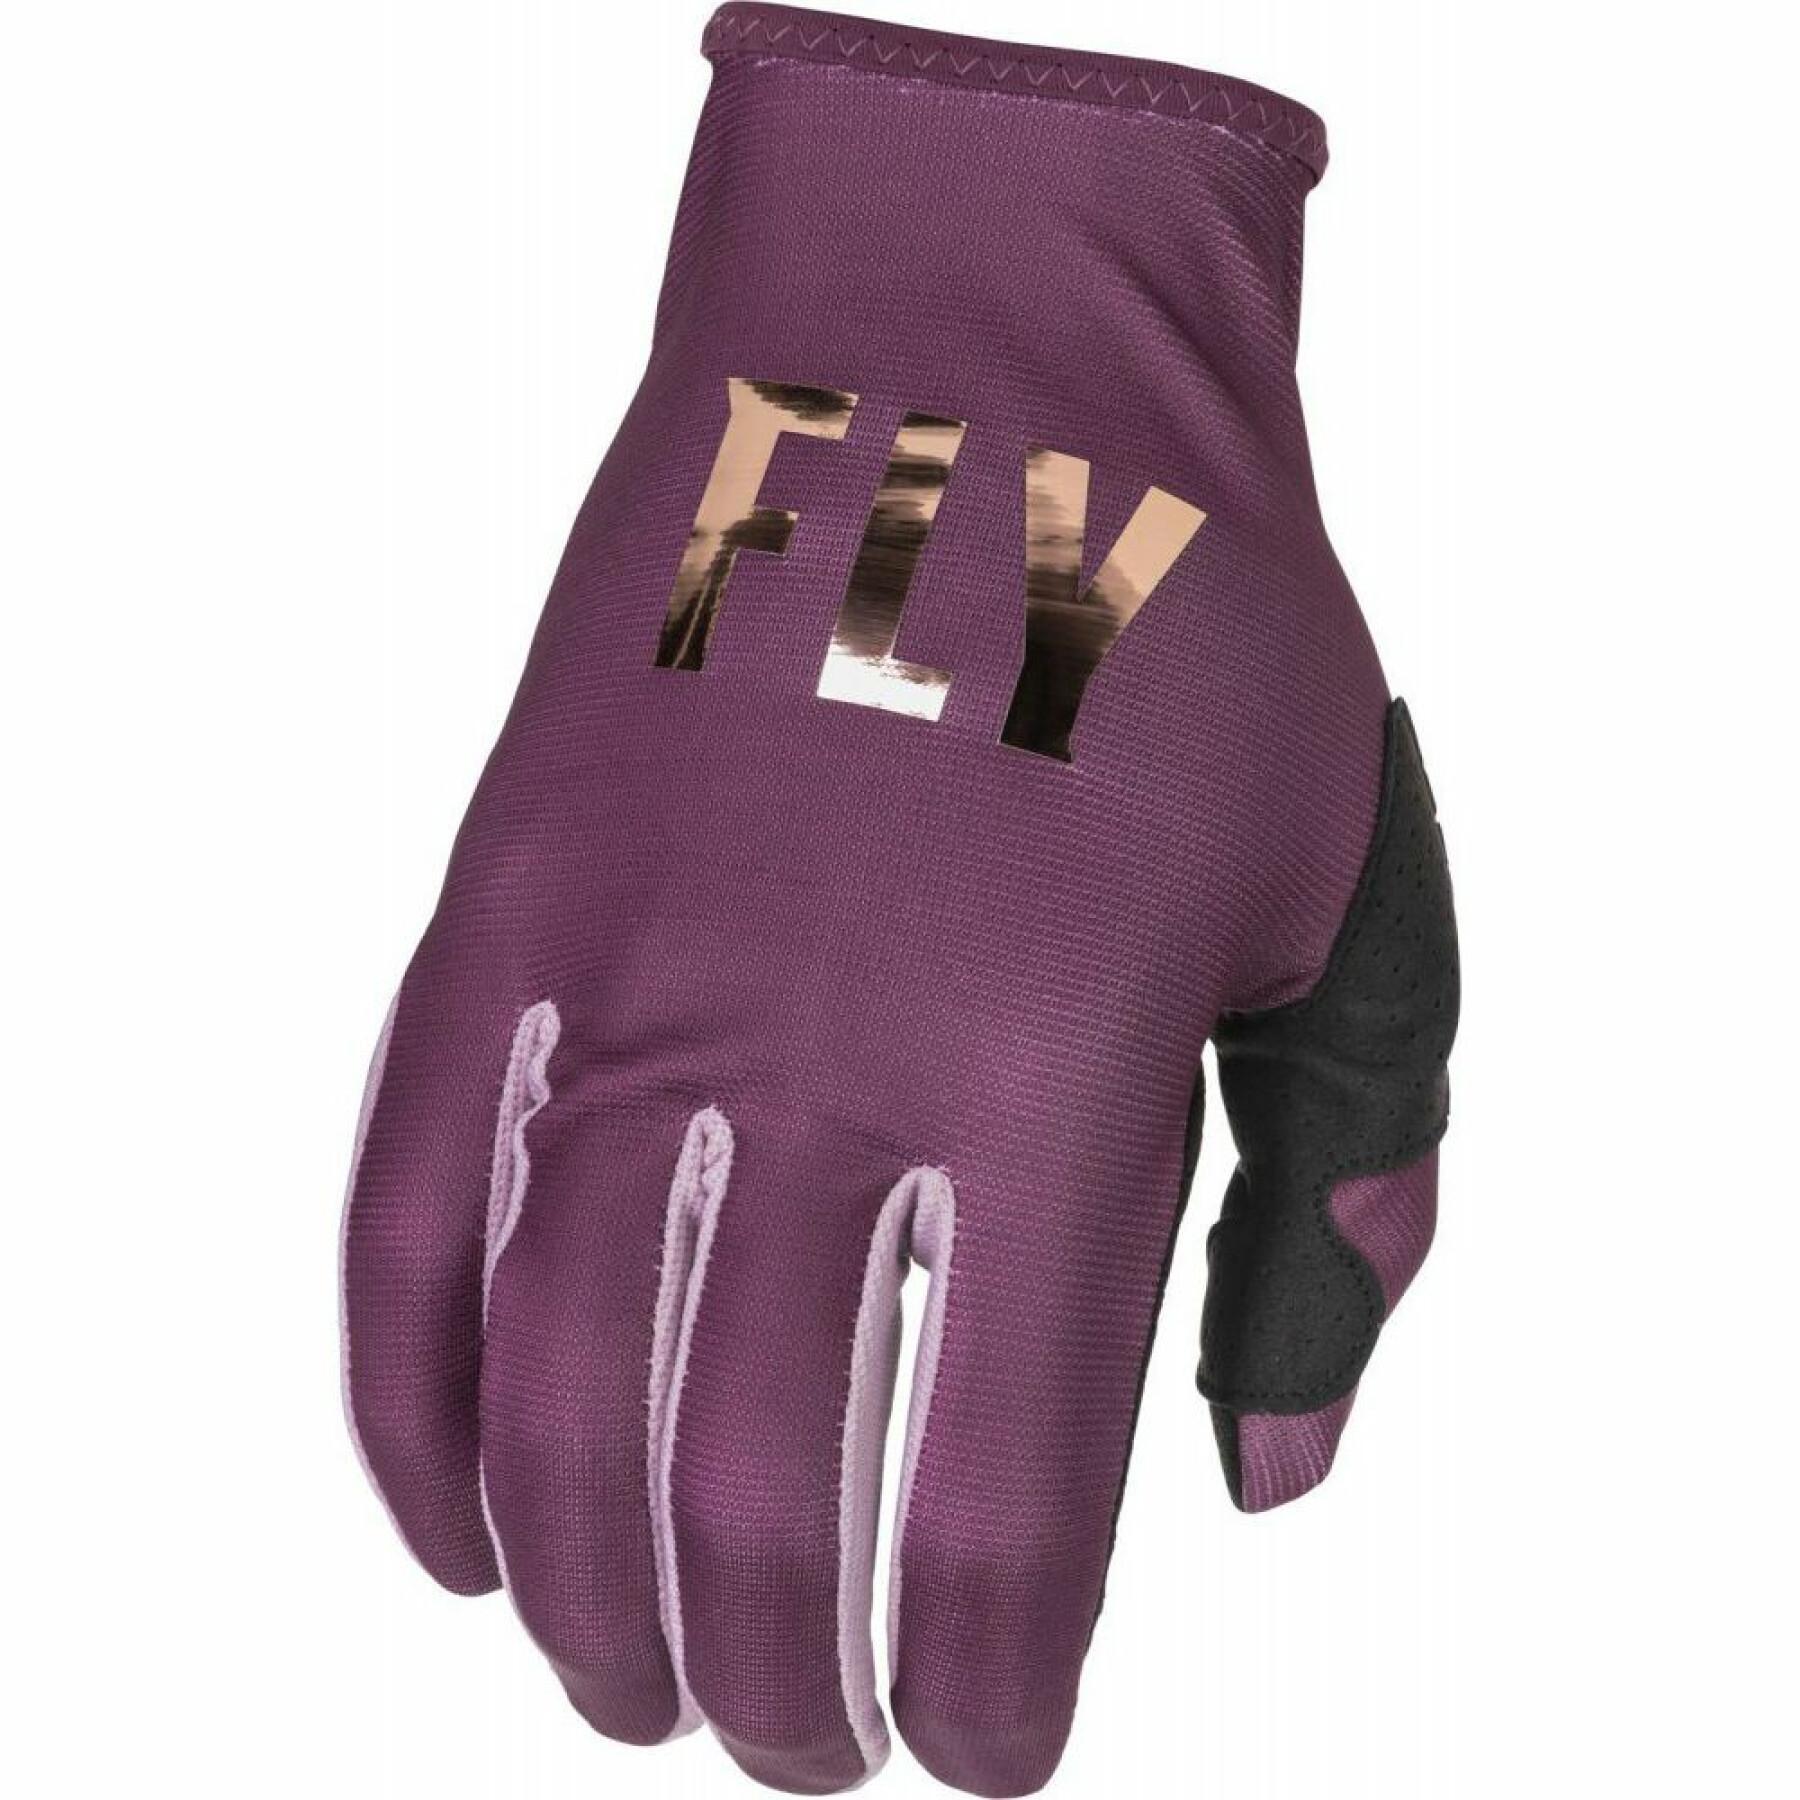 Women's gloves Fly Racing Lite